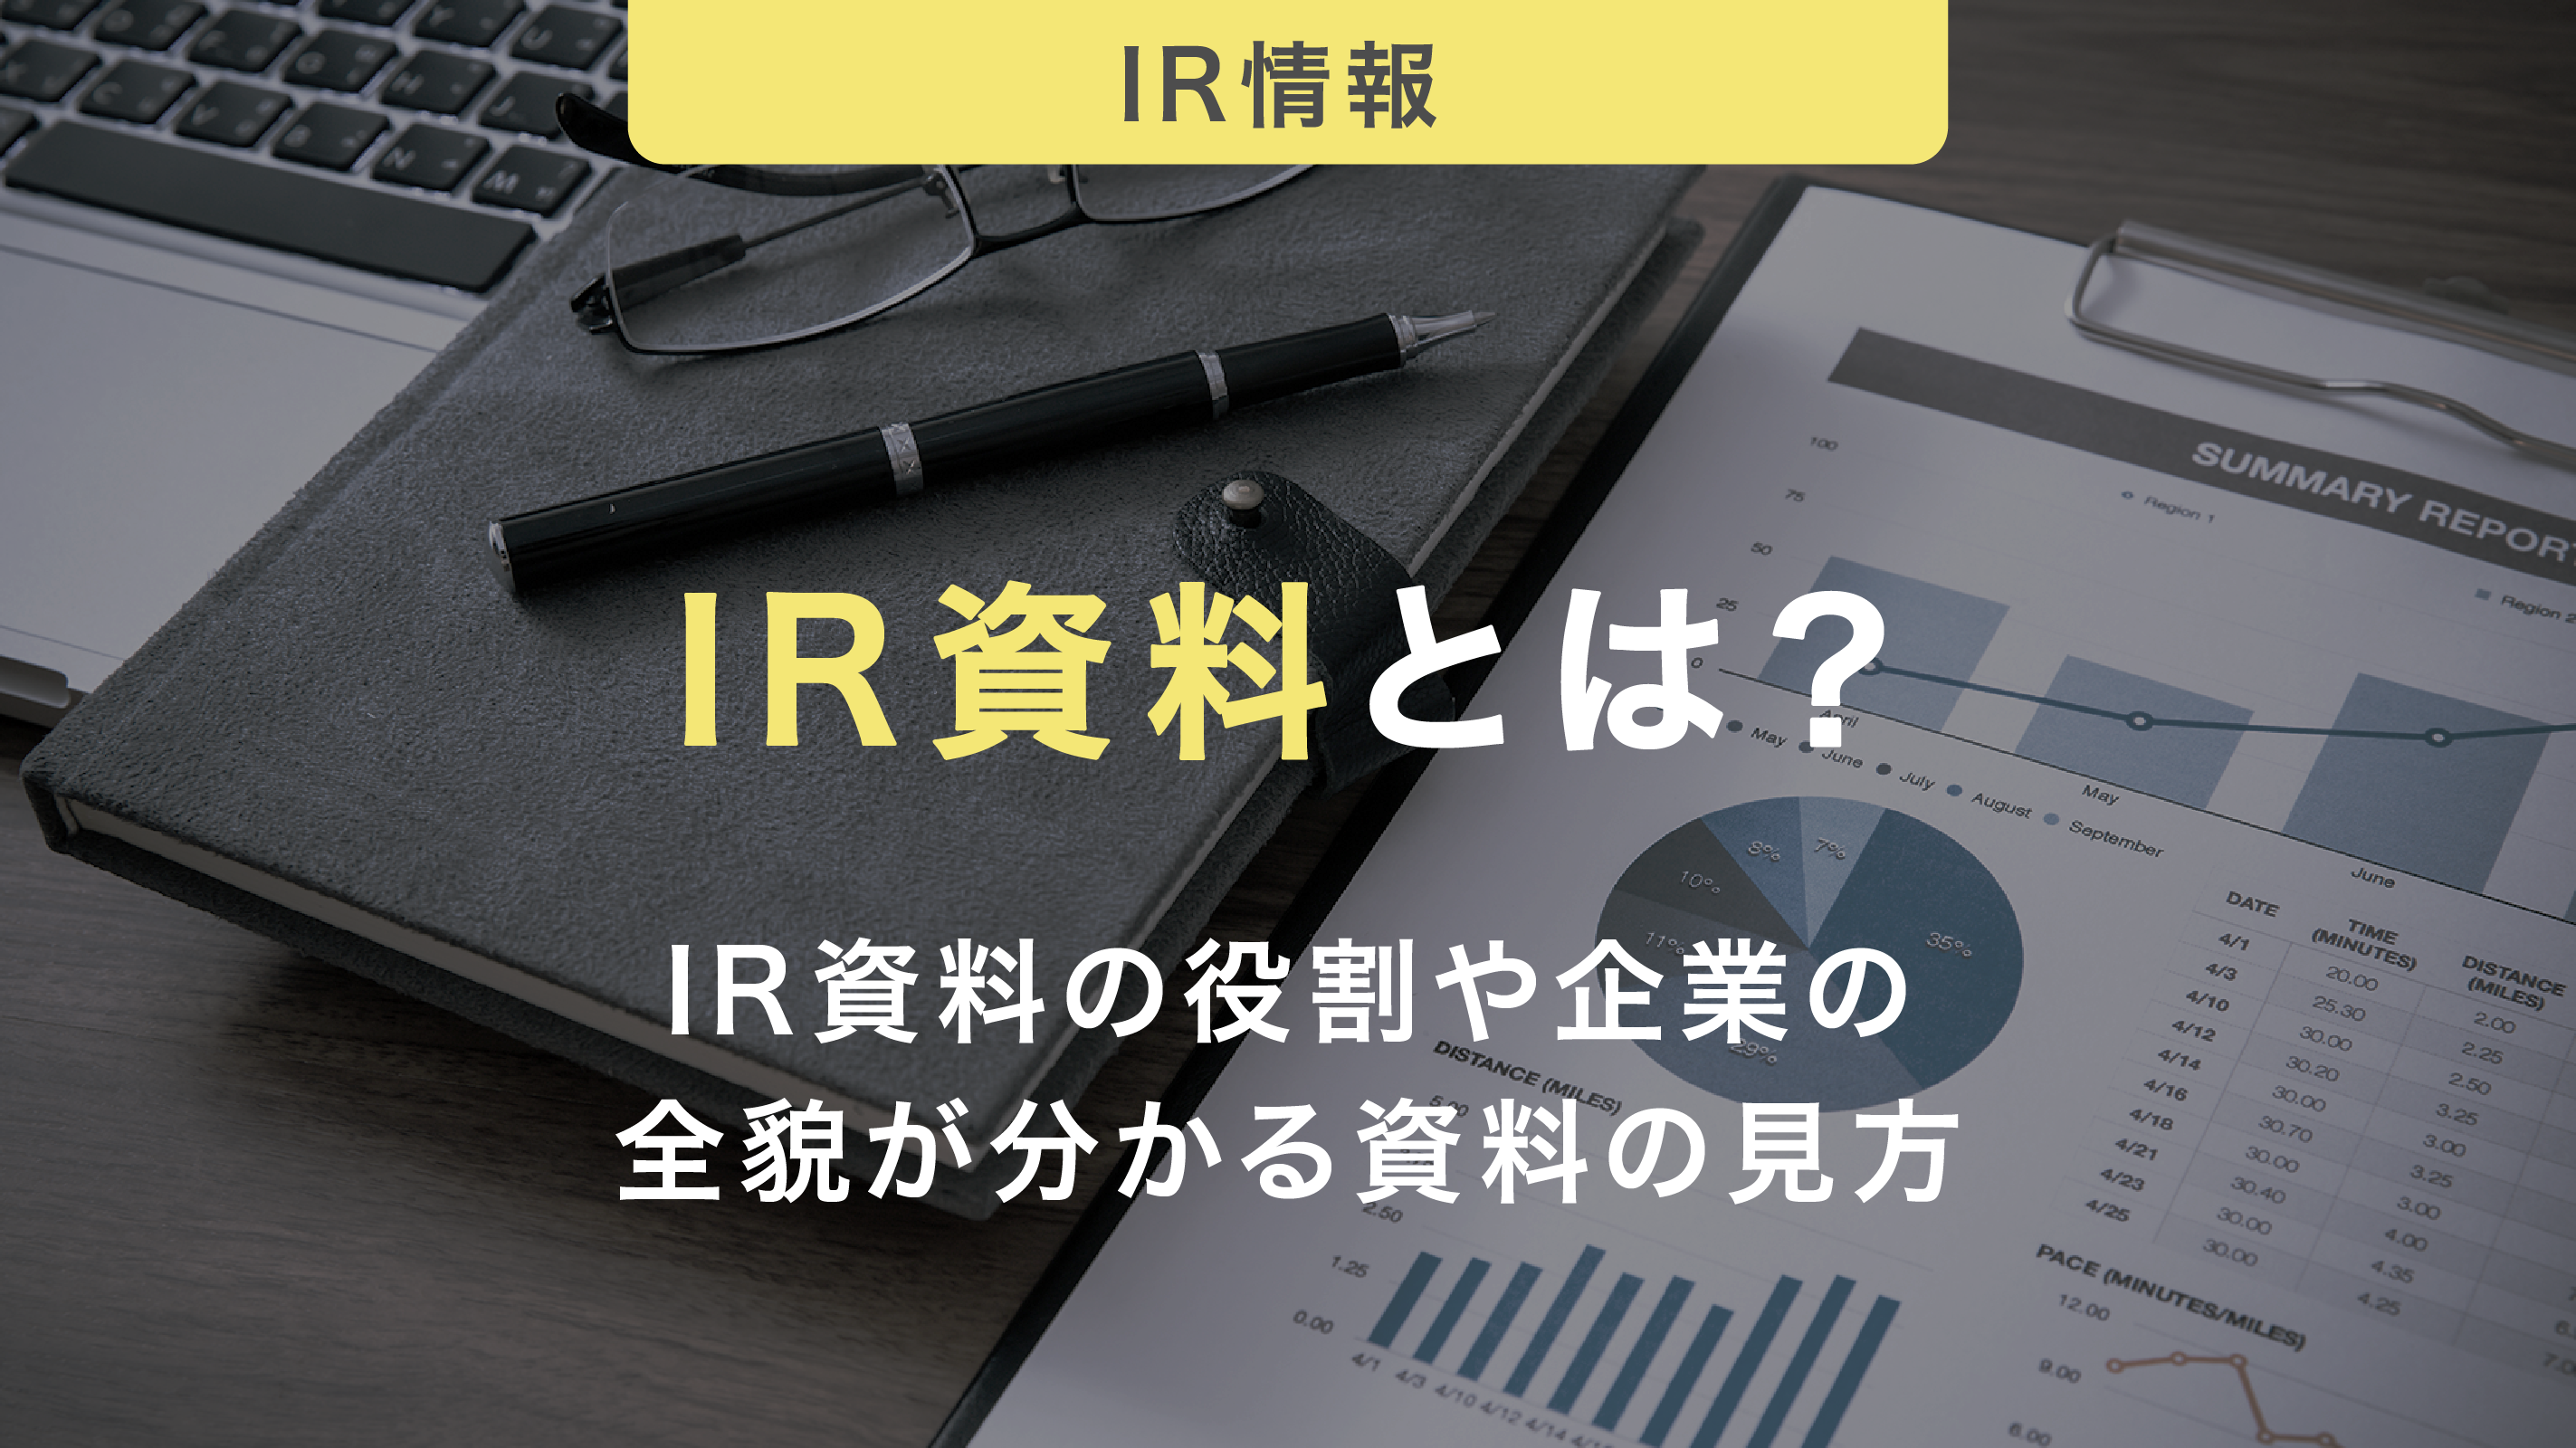 IR資料とは？IR資料の役割や企業の全貌が分かる資料の見方について解説